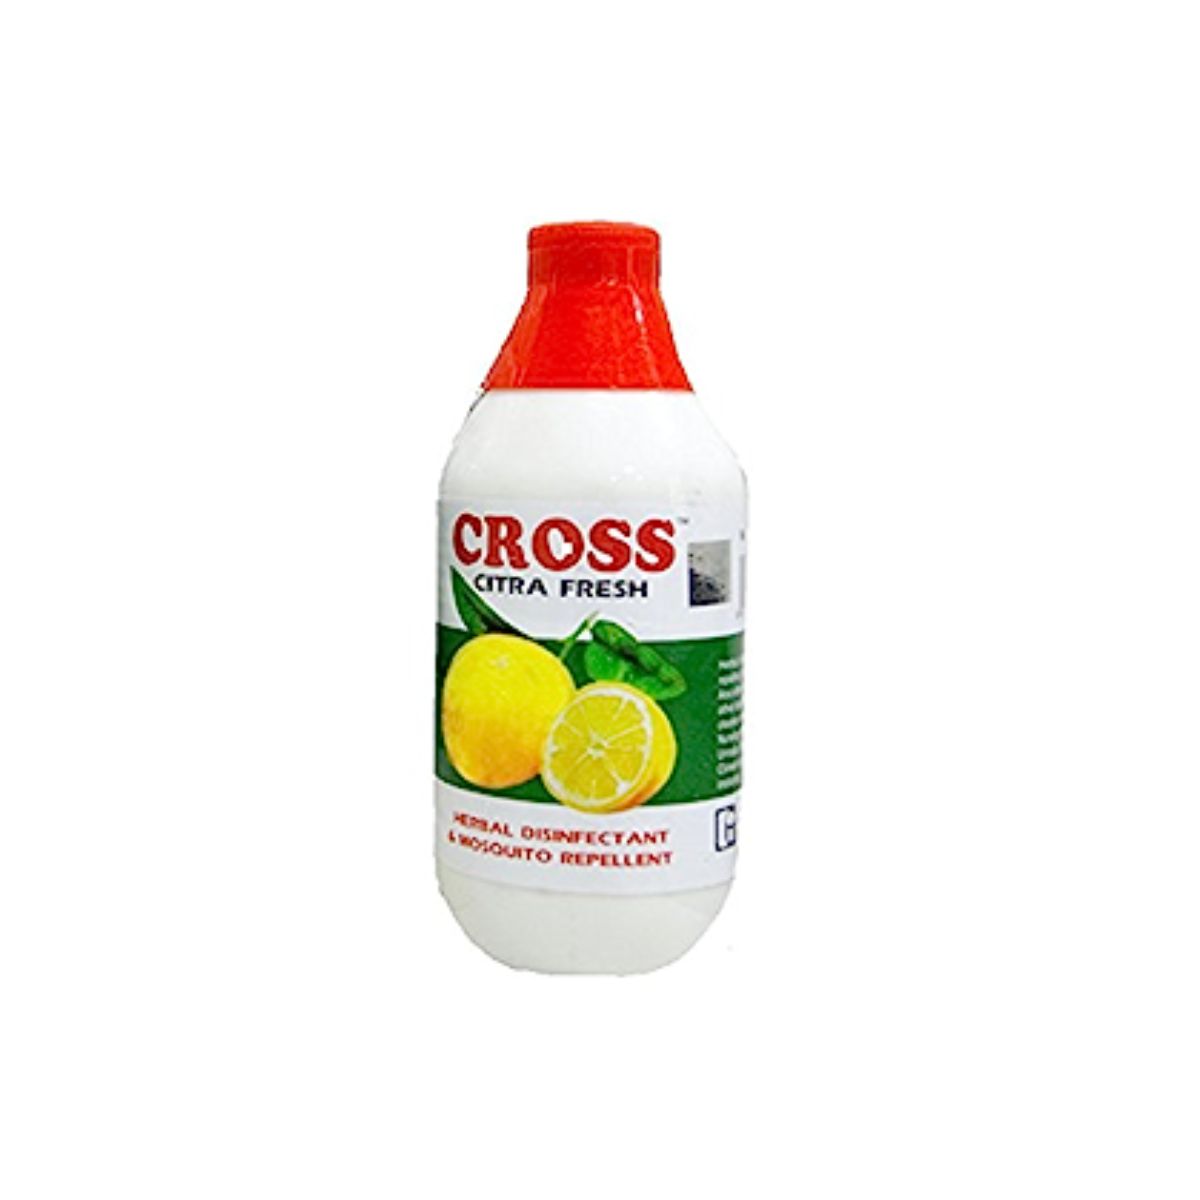 Cross Citra Fresh - Herbal Disinfectant & Mosquito Repellent - 500ml